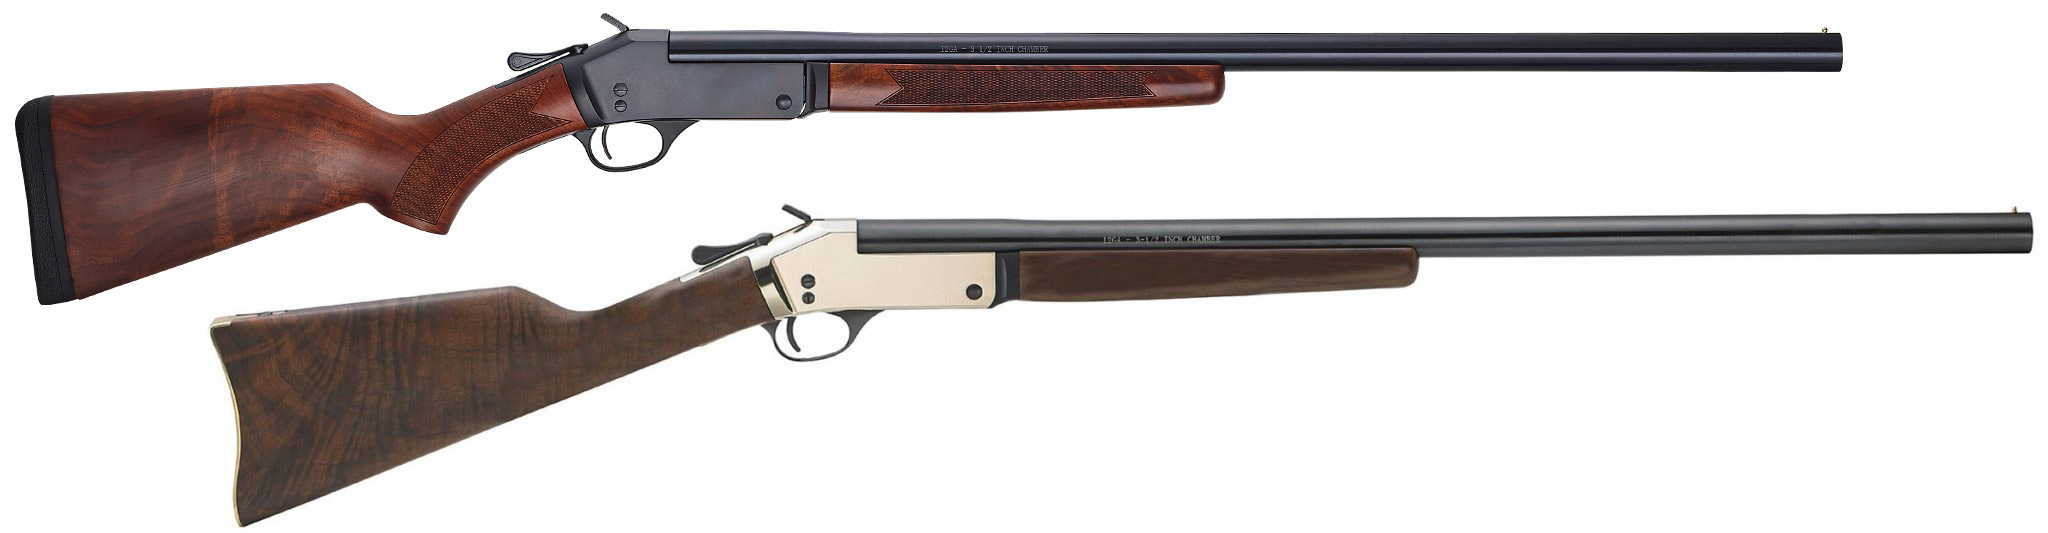 NEW ENGLAND FIREARMS PARDNER shotgun For Sale. 